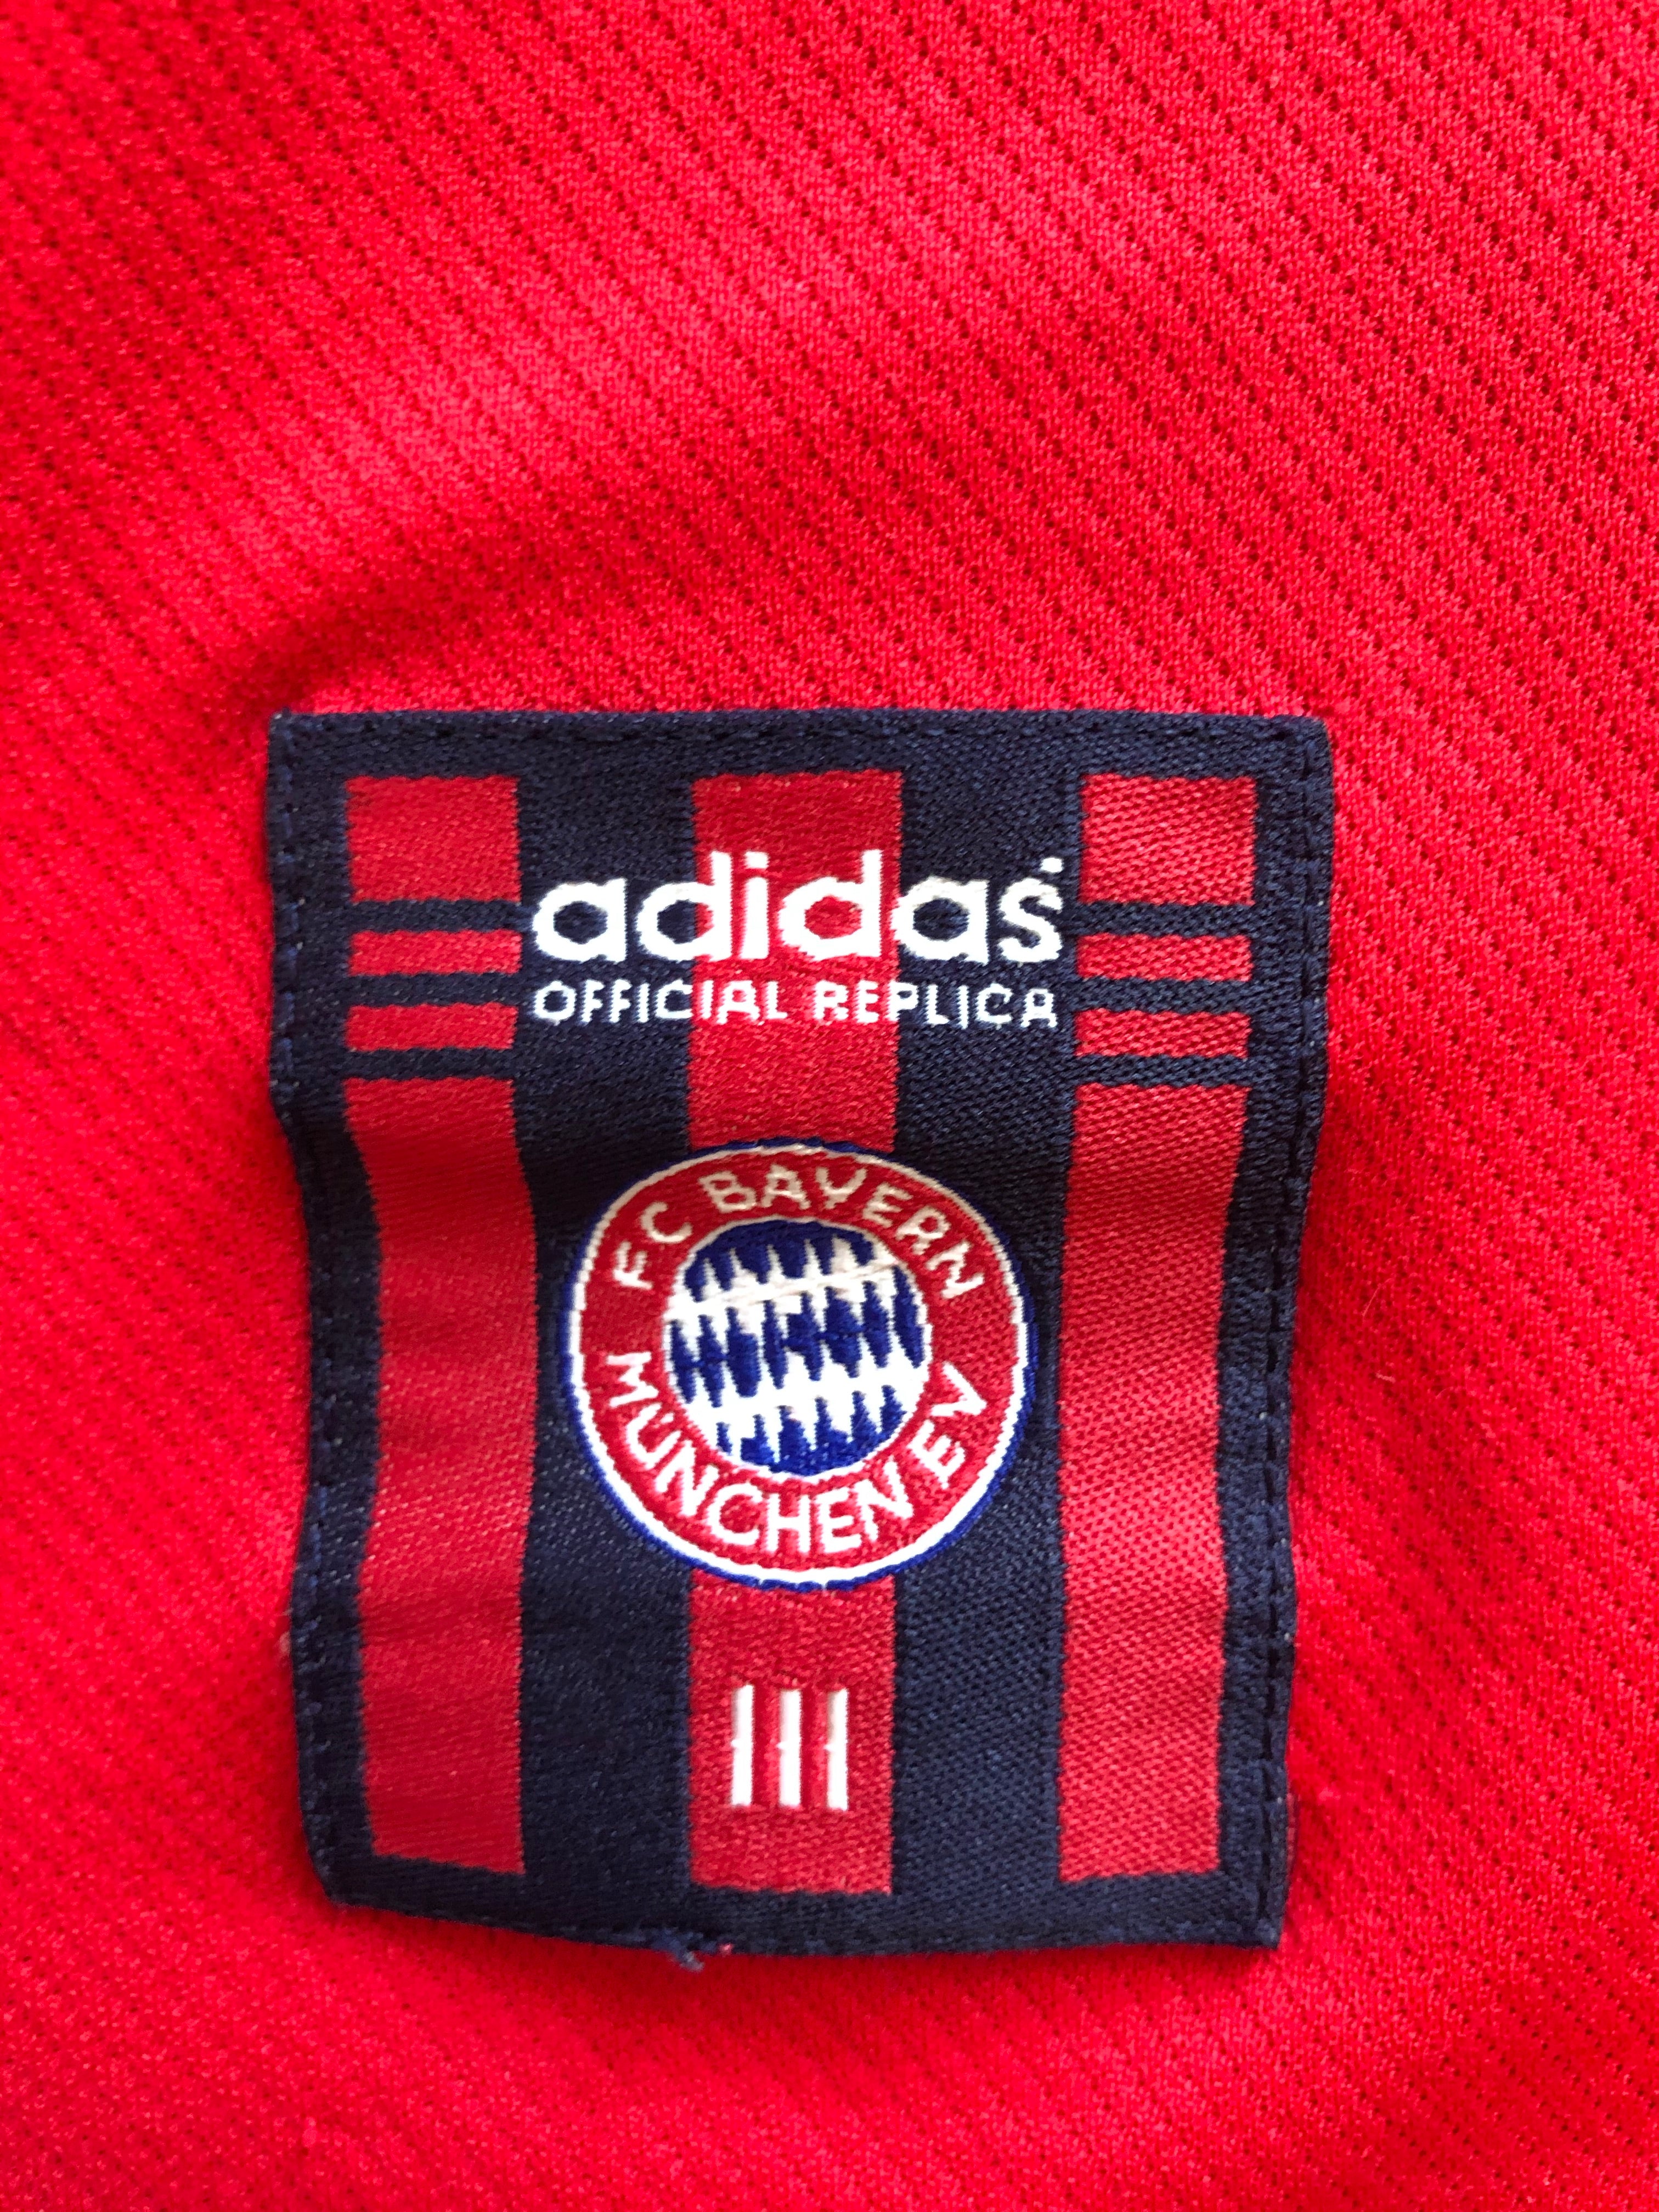 1999/01 Bayern Munich Home Shirt Salihamidzic #20 (S) 8/10